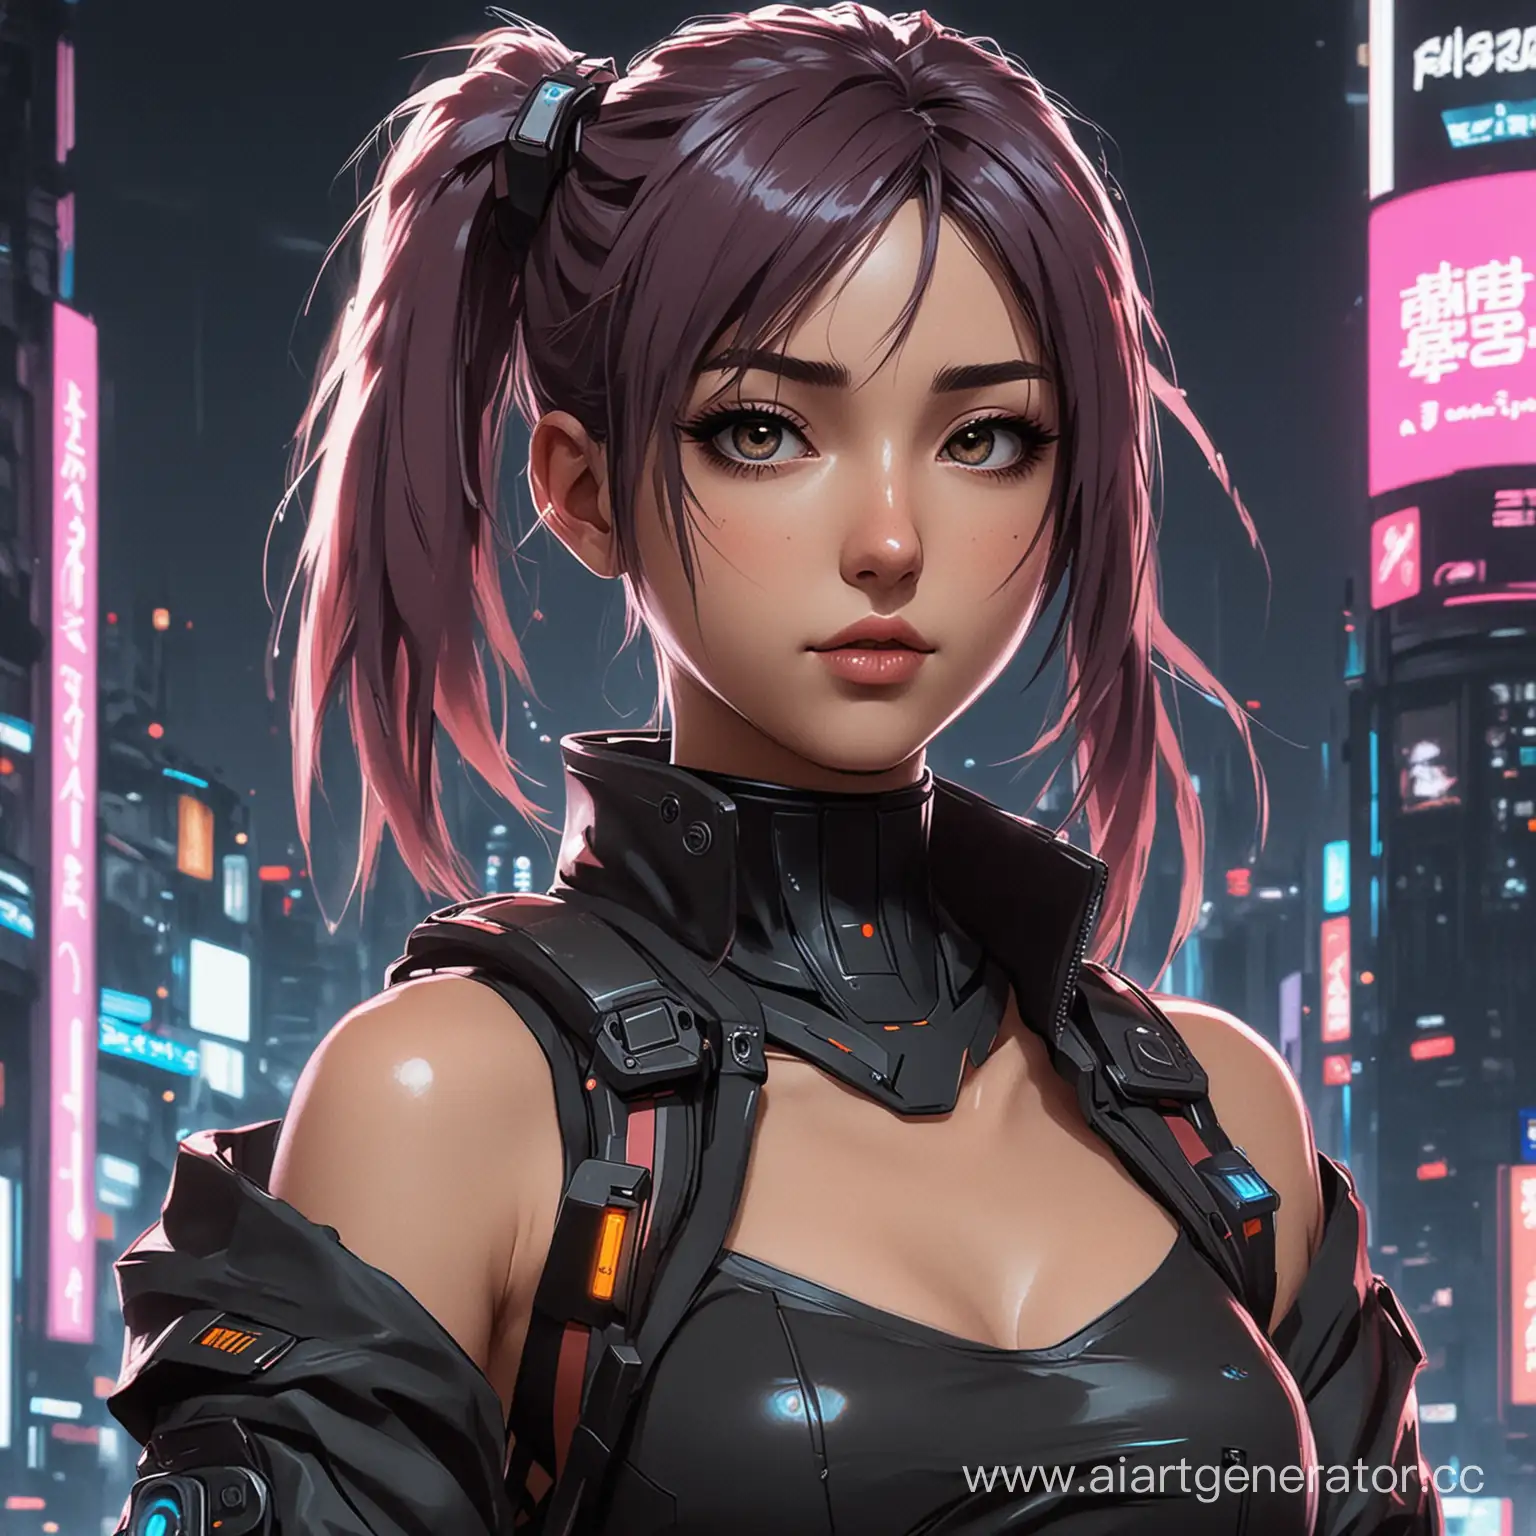 Cyberpunk-Anime-Girl-with-Futuristic-Neon-City-Background